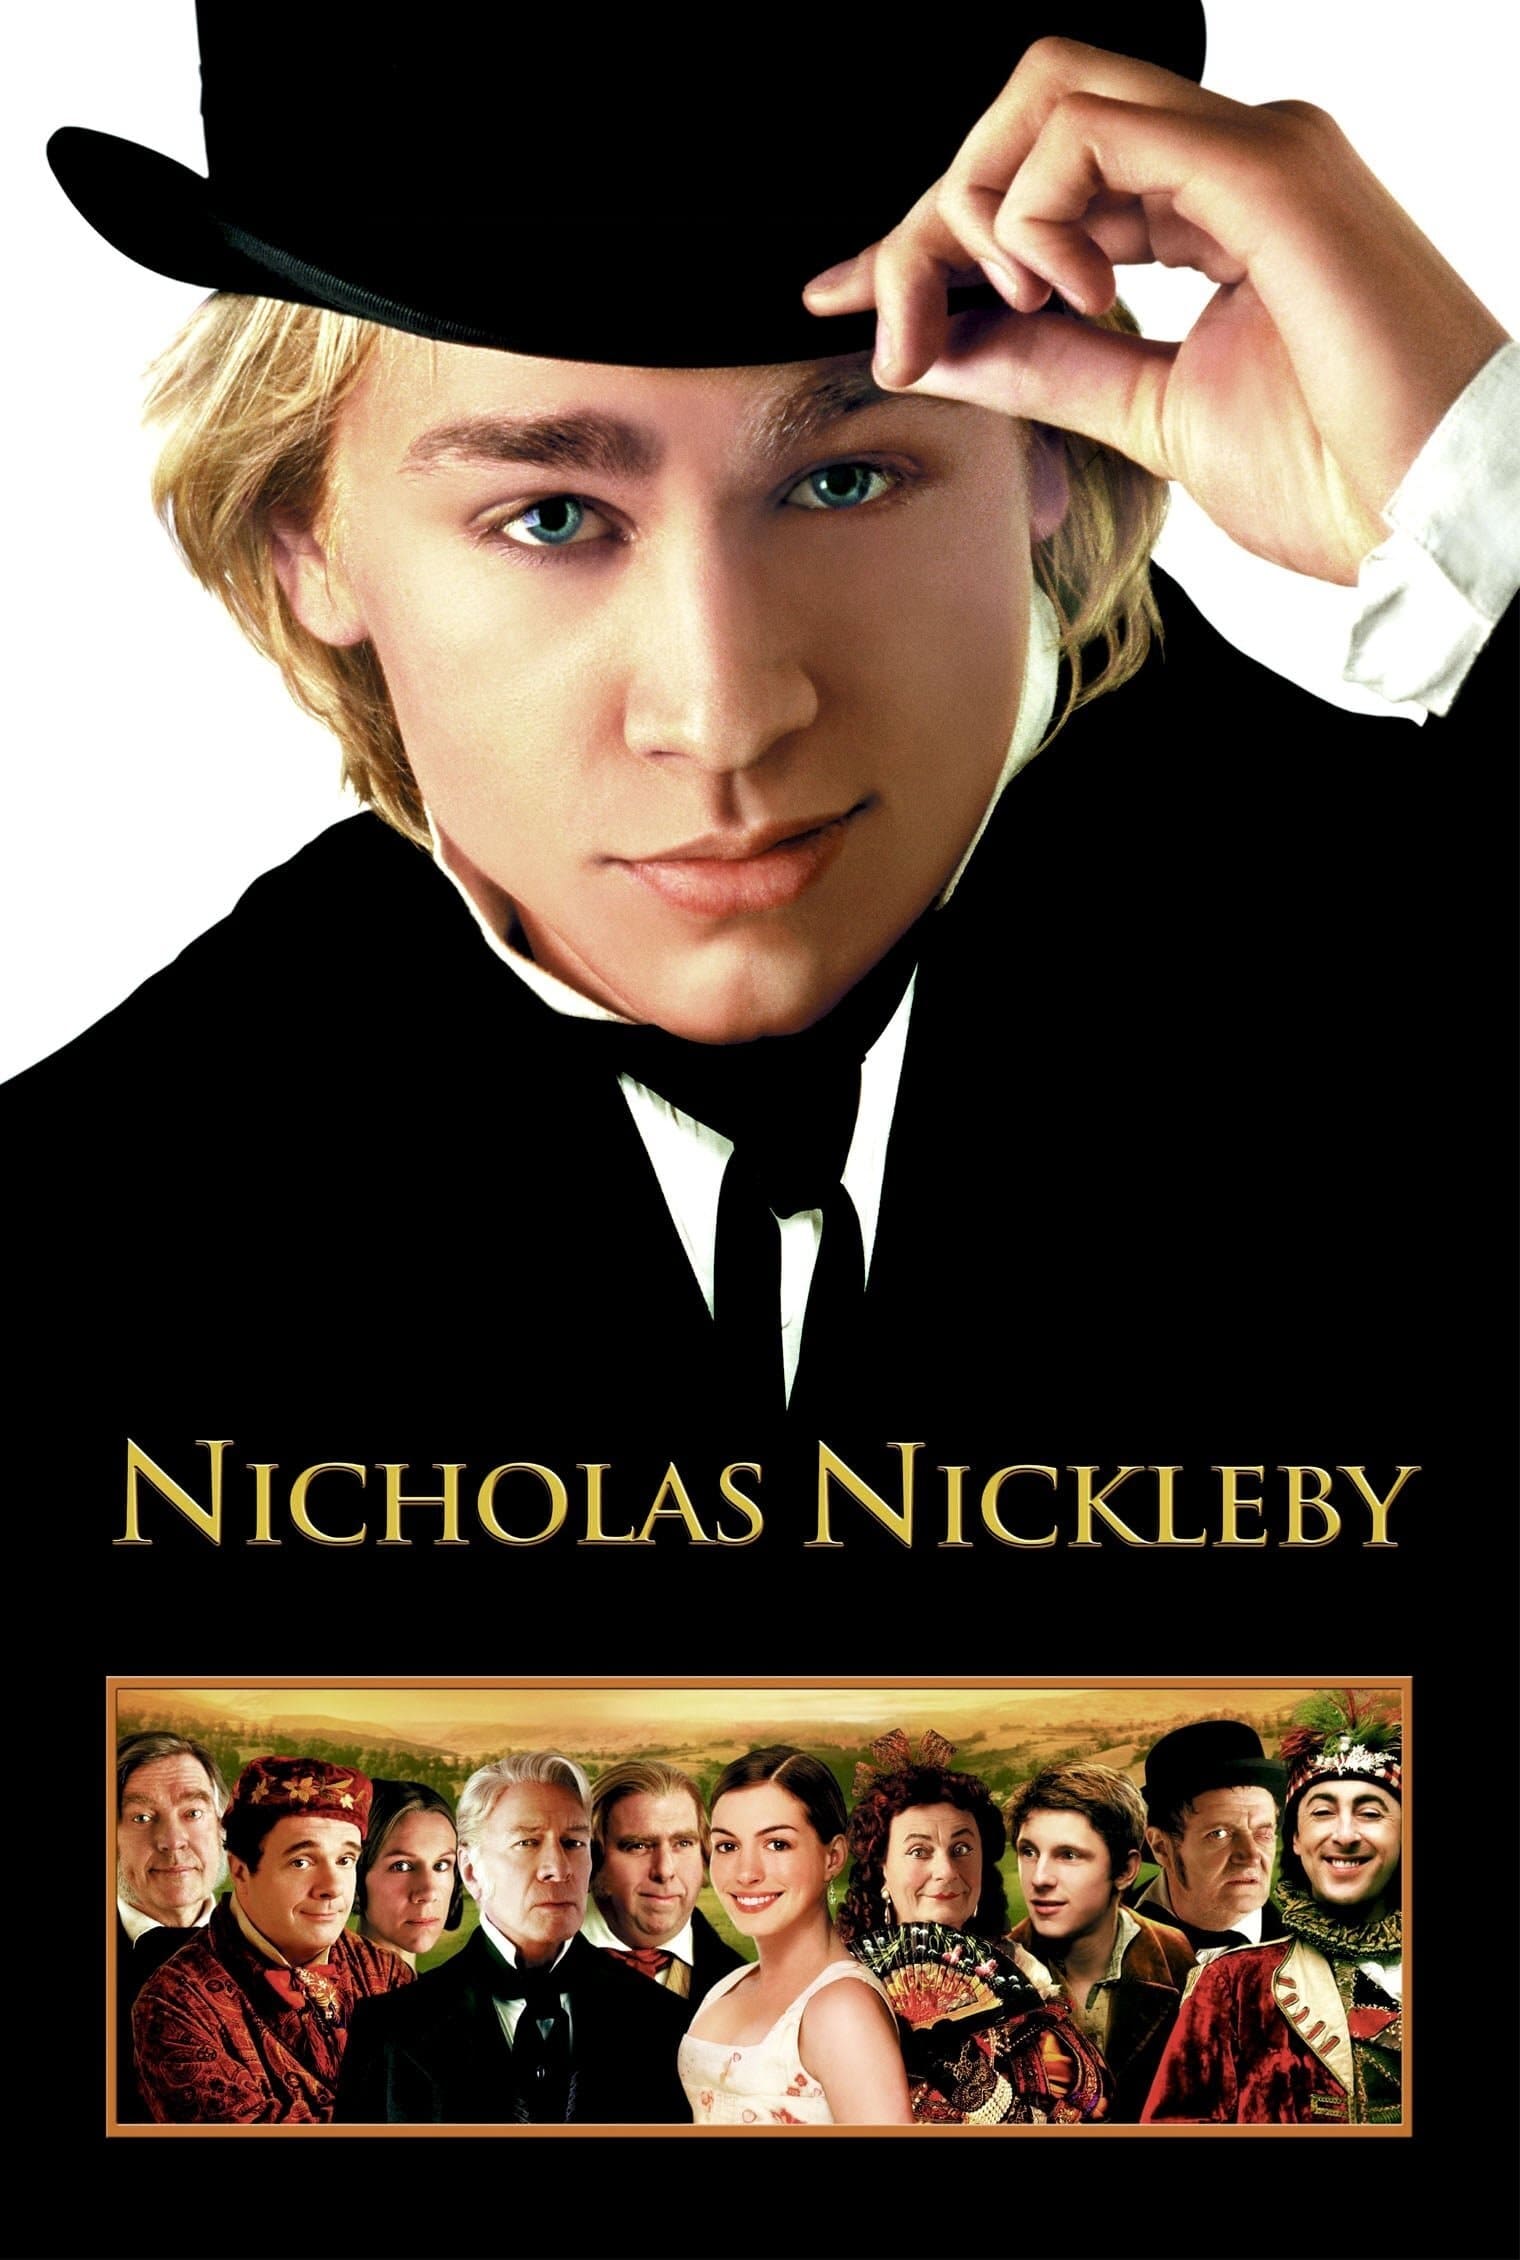 Nicholas Nickleby film